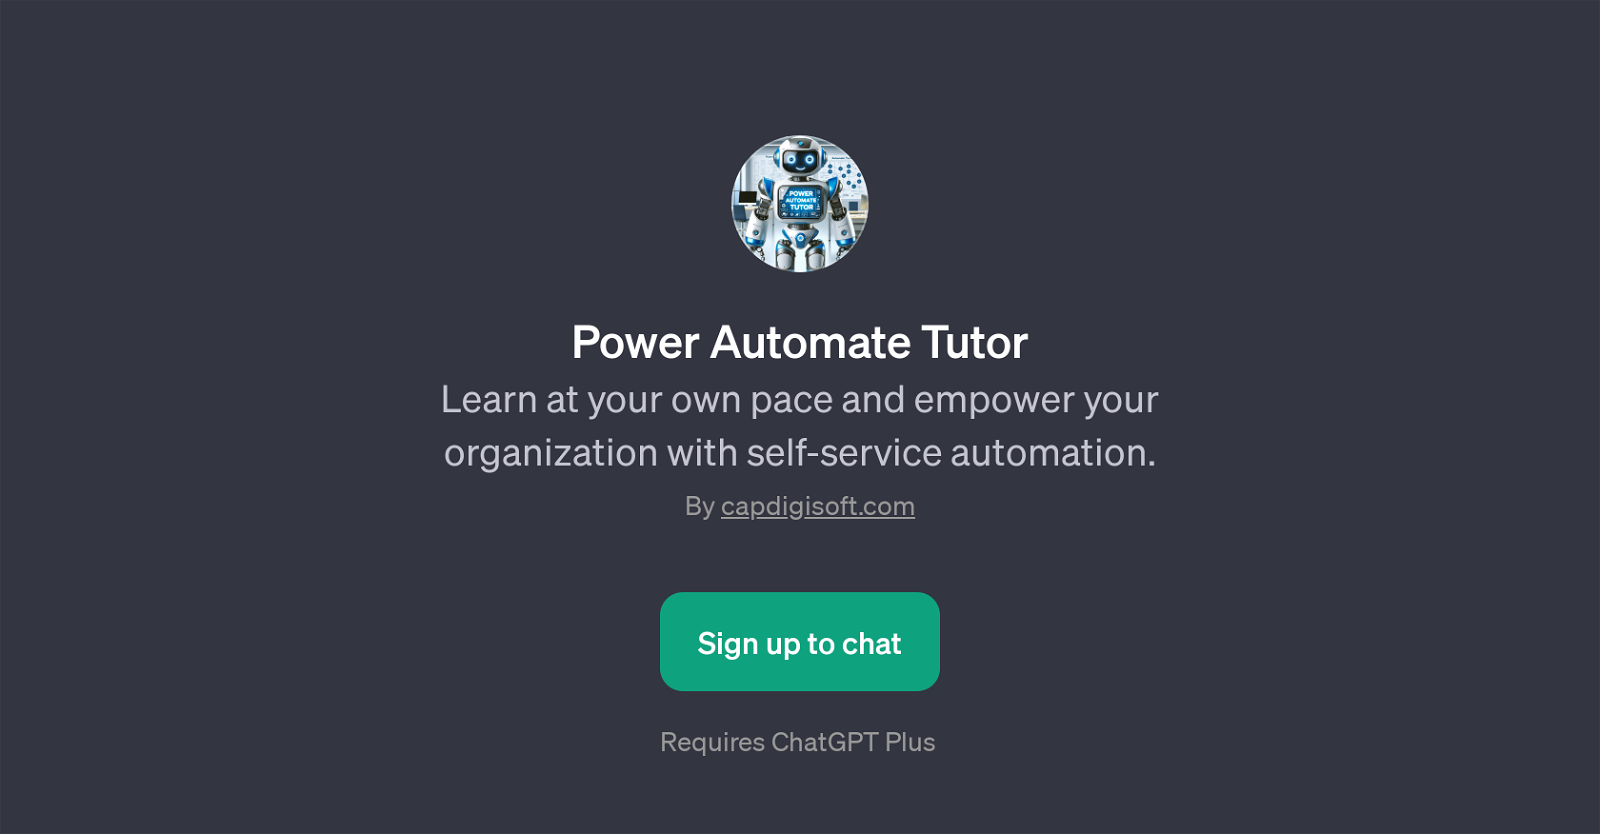 Power Automate Tutor website